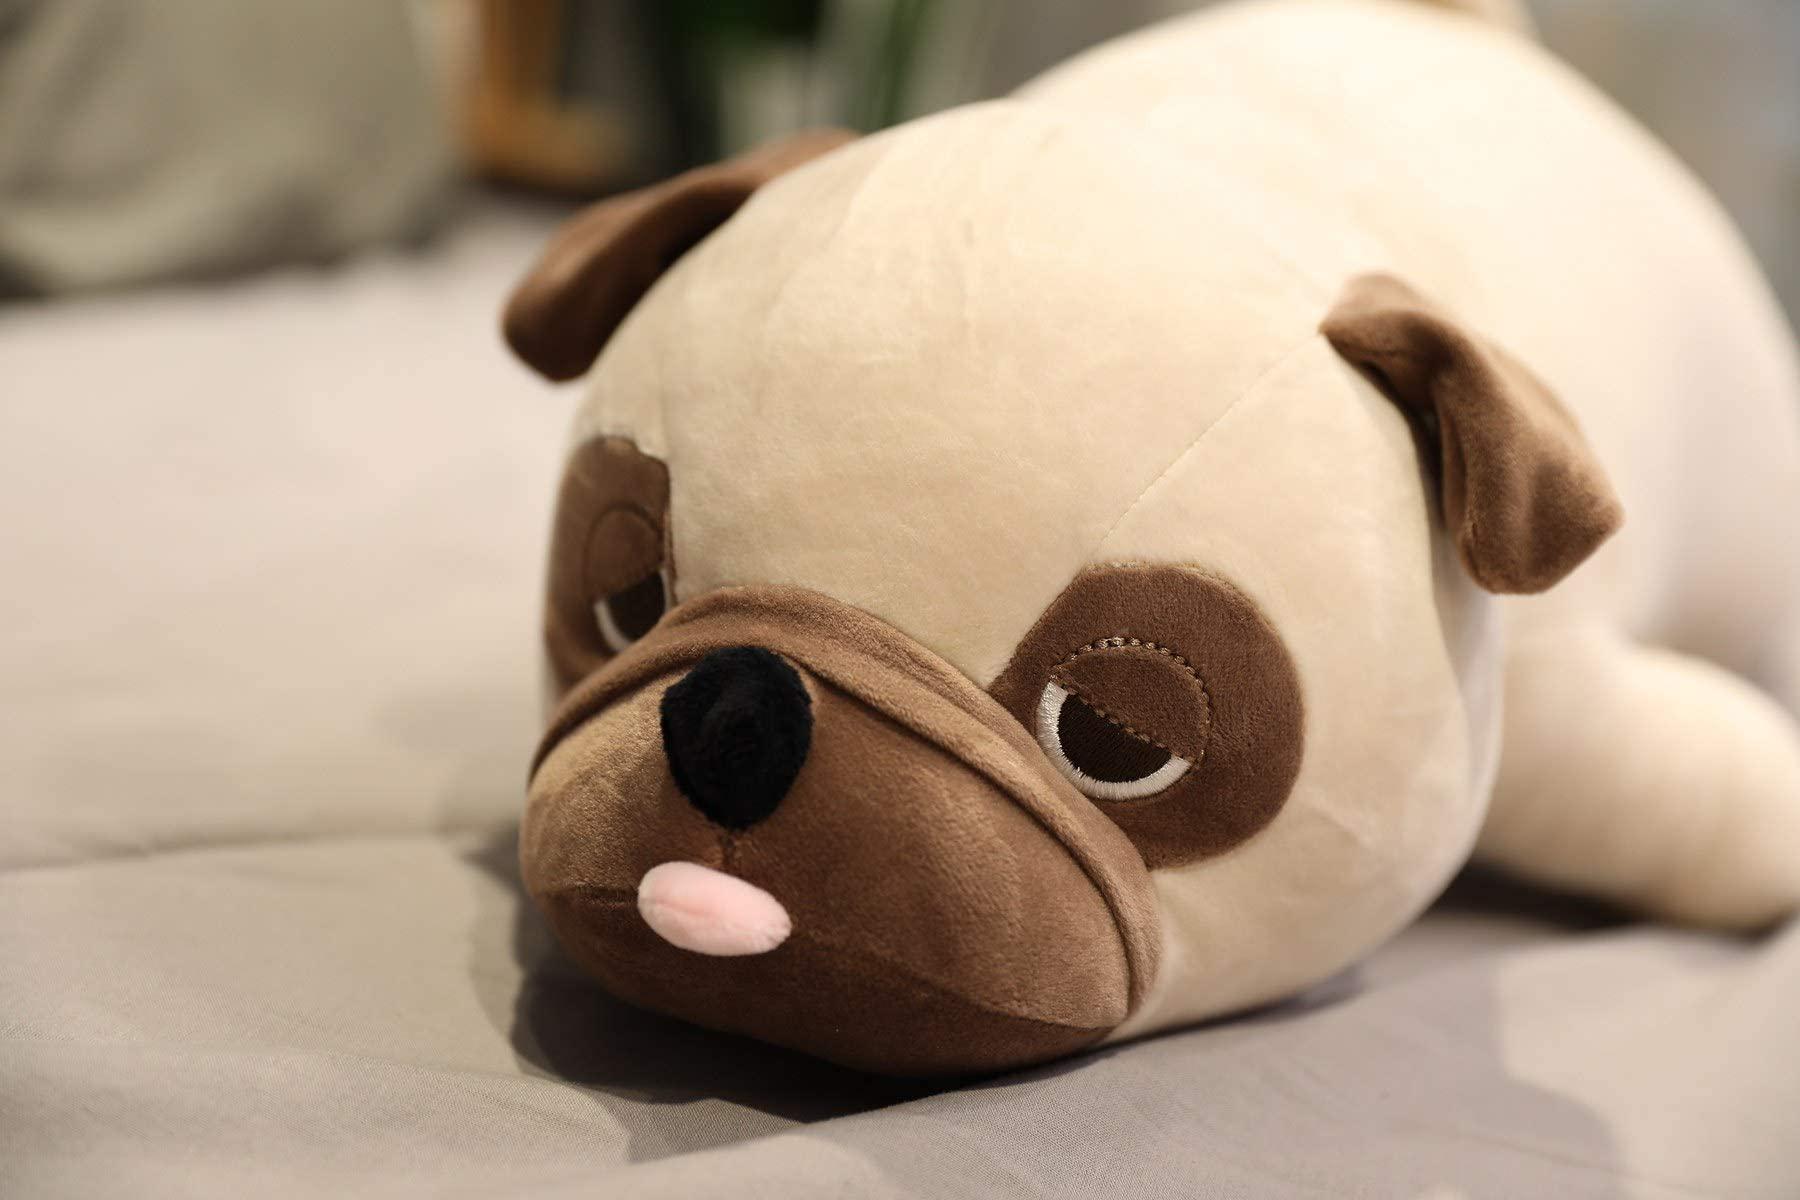 spring country bulldog plush toy, 20" stuffed animal throw plushie pillow doll, soft fluffy puppy dog hugging cushion - prese